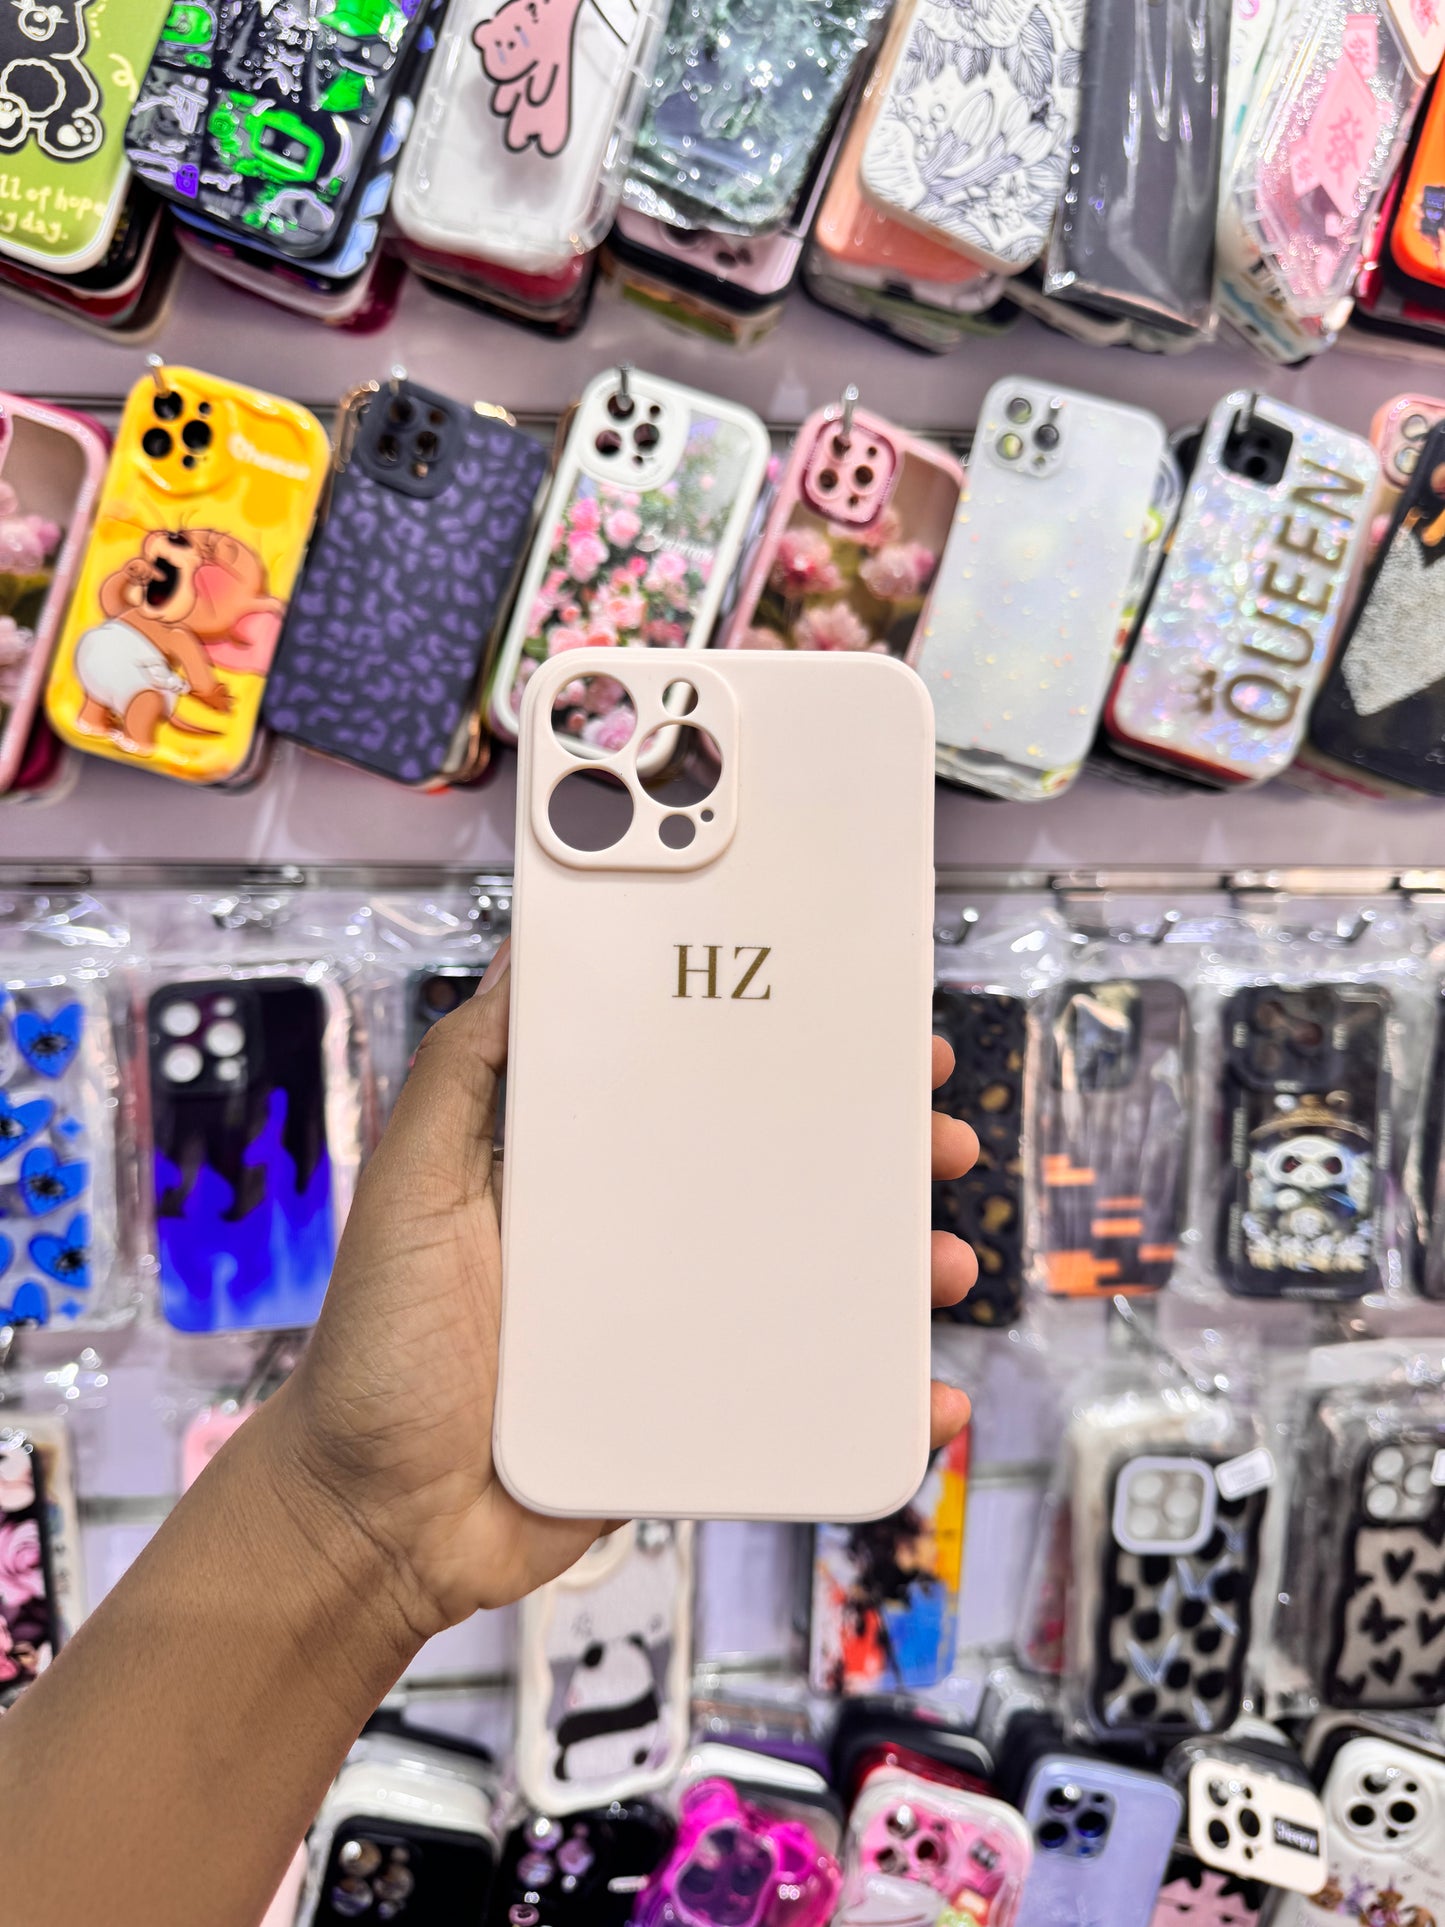 Hz Case For IPhones